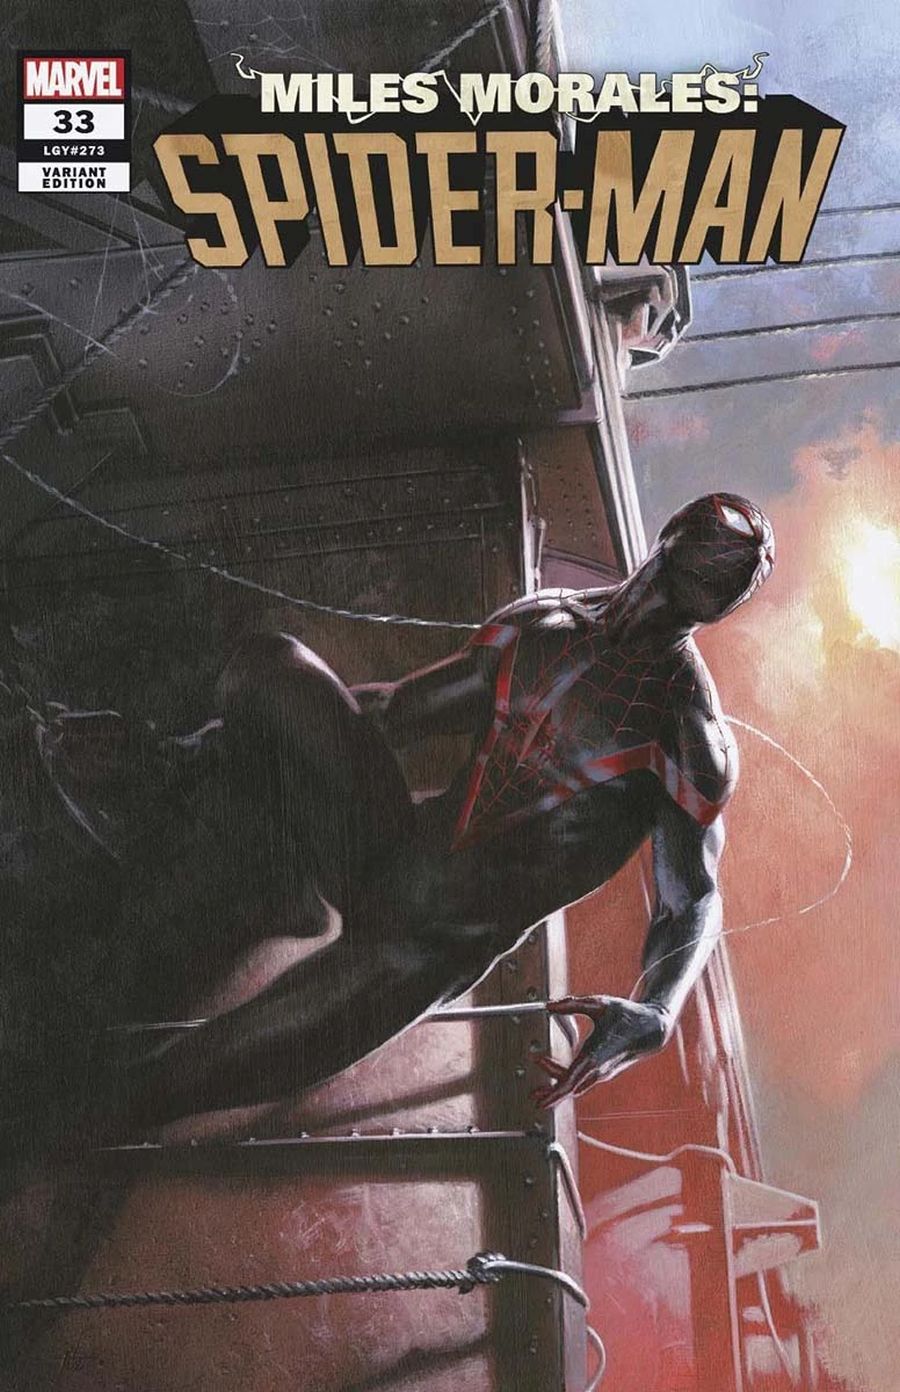 Miles Morales: Spider-Man #33